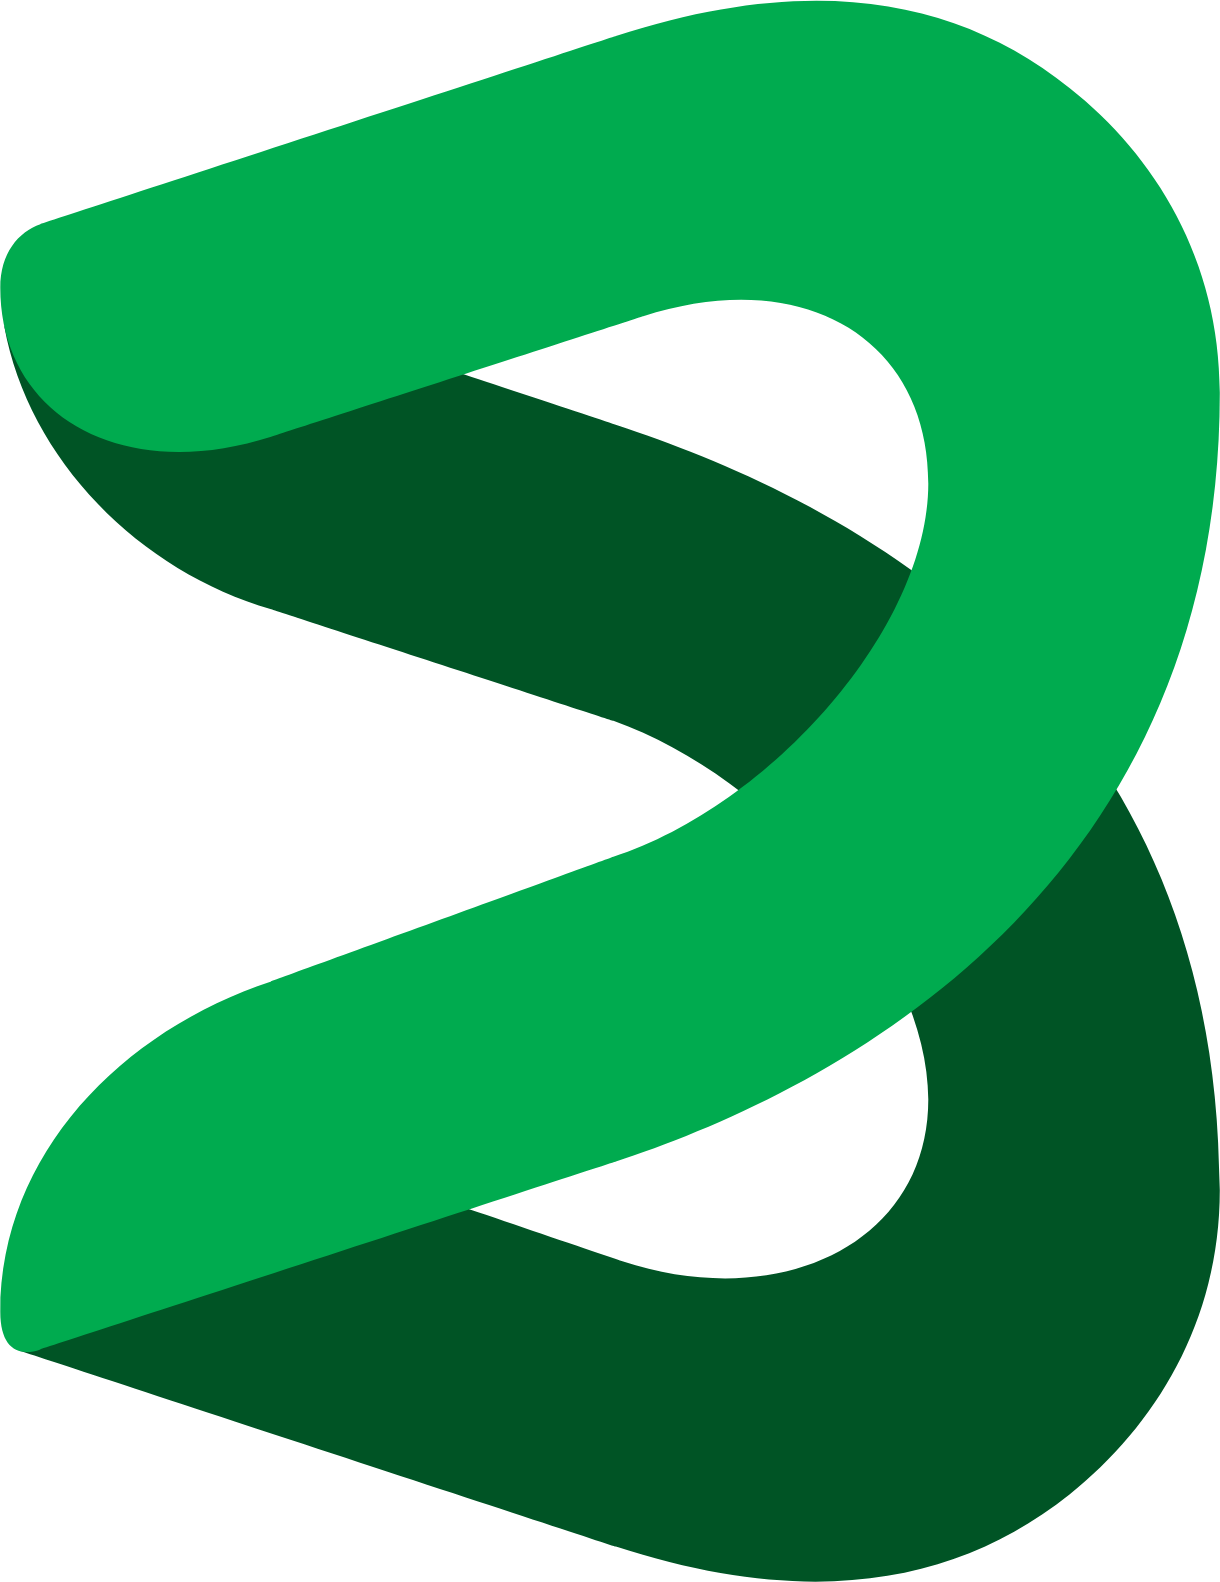 UmweltBank logo (PNG transparent)